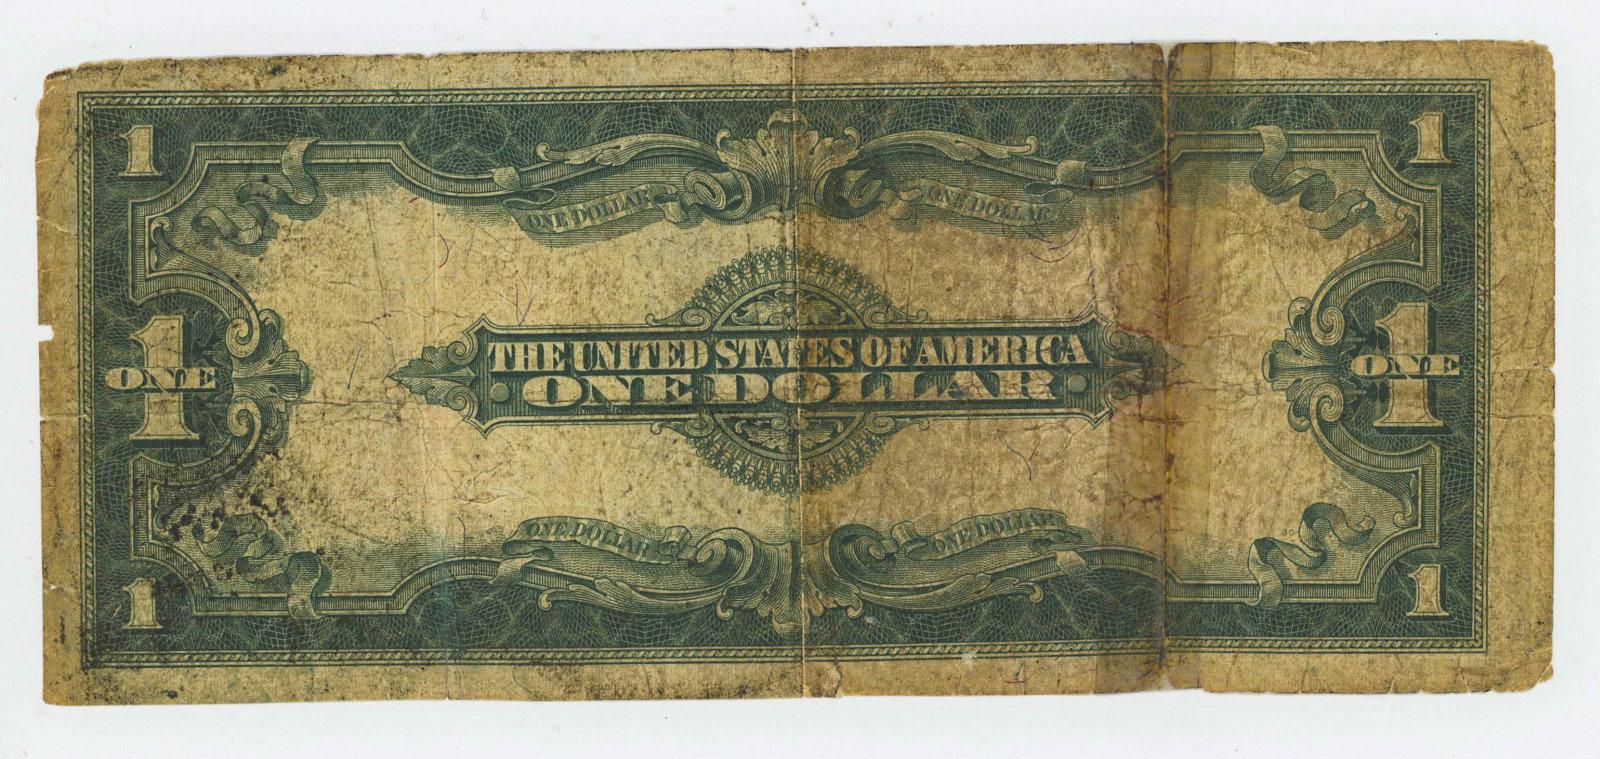 1923 ONE DOLLAR UNITED STATES NOTE